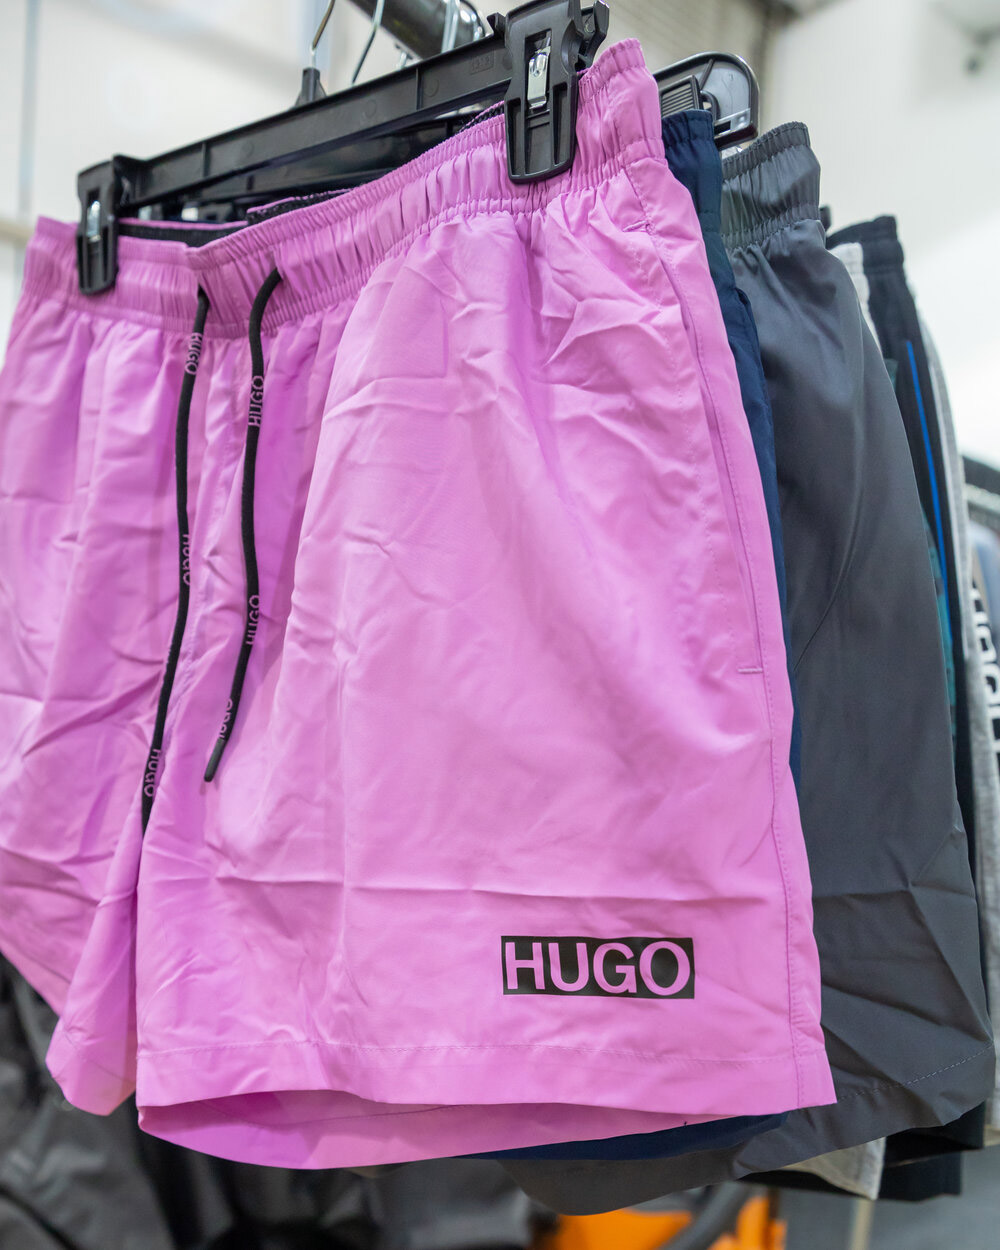 Hugo Boss Sample Sale in Images